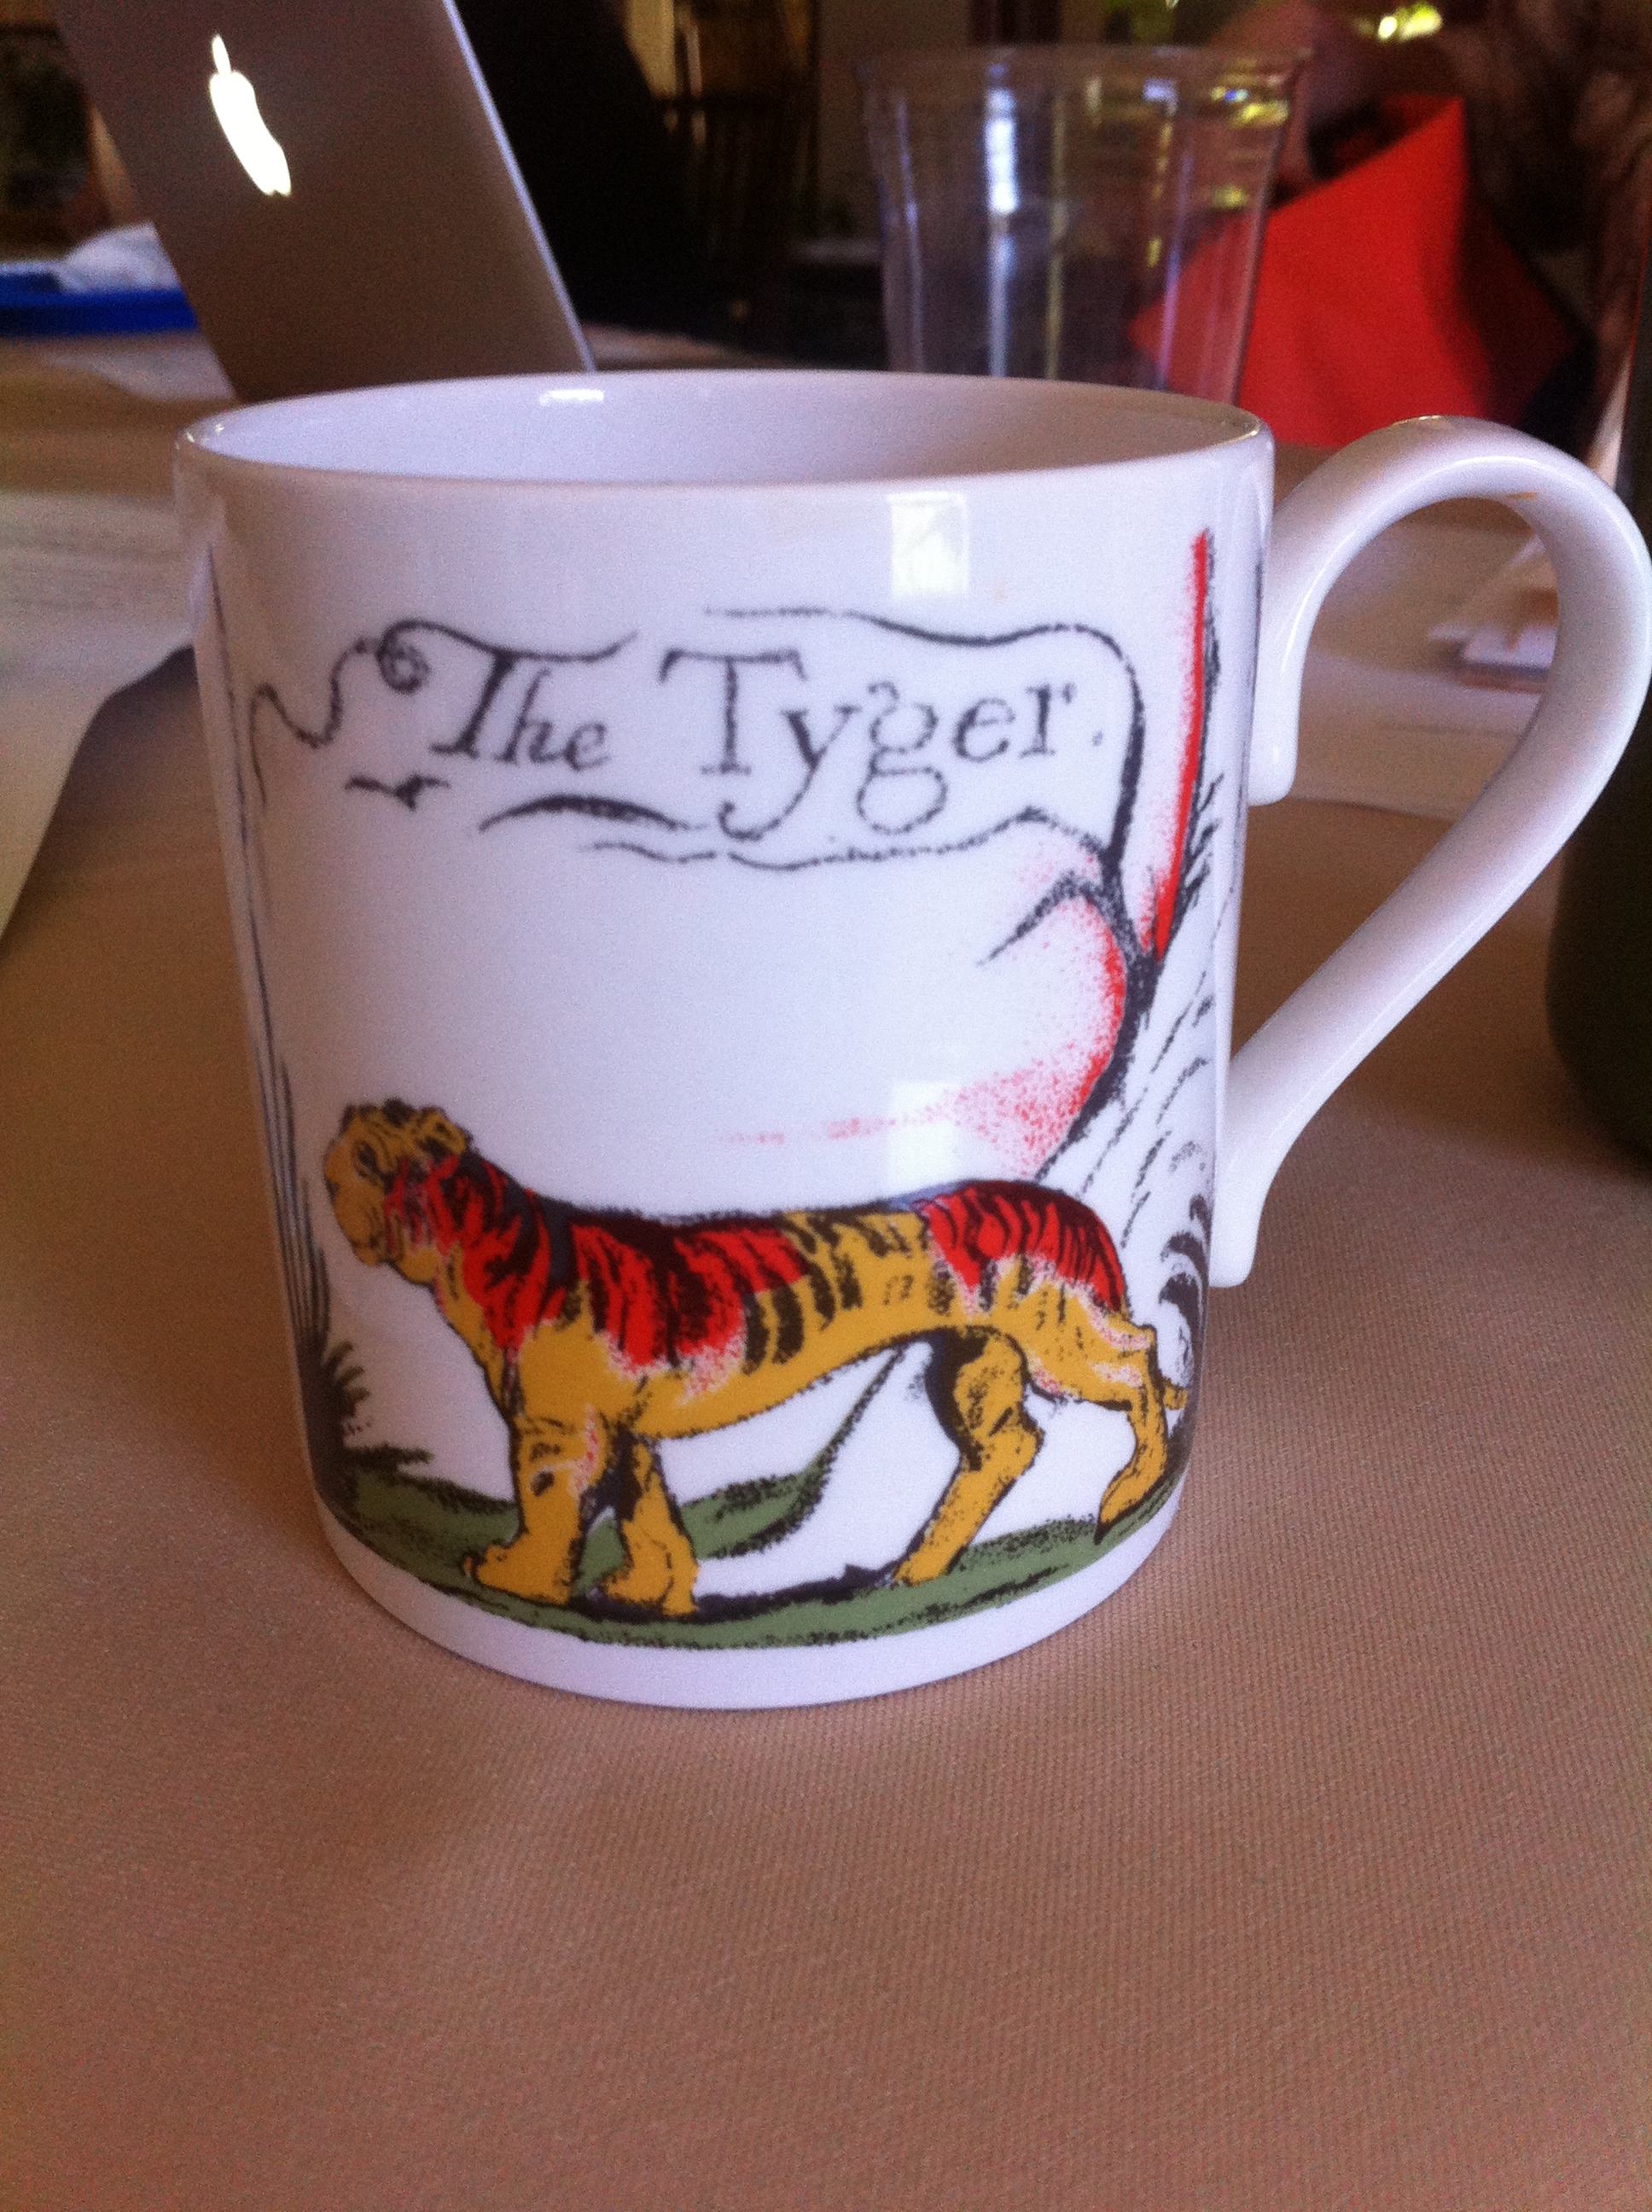 Coffee mug featuring William Blake's poem "The Tyger."